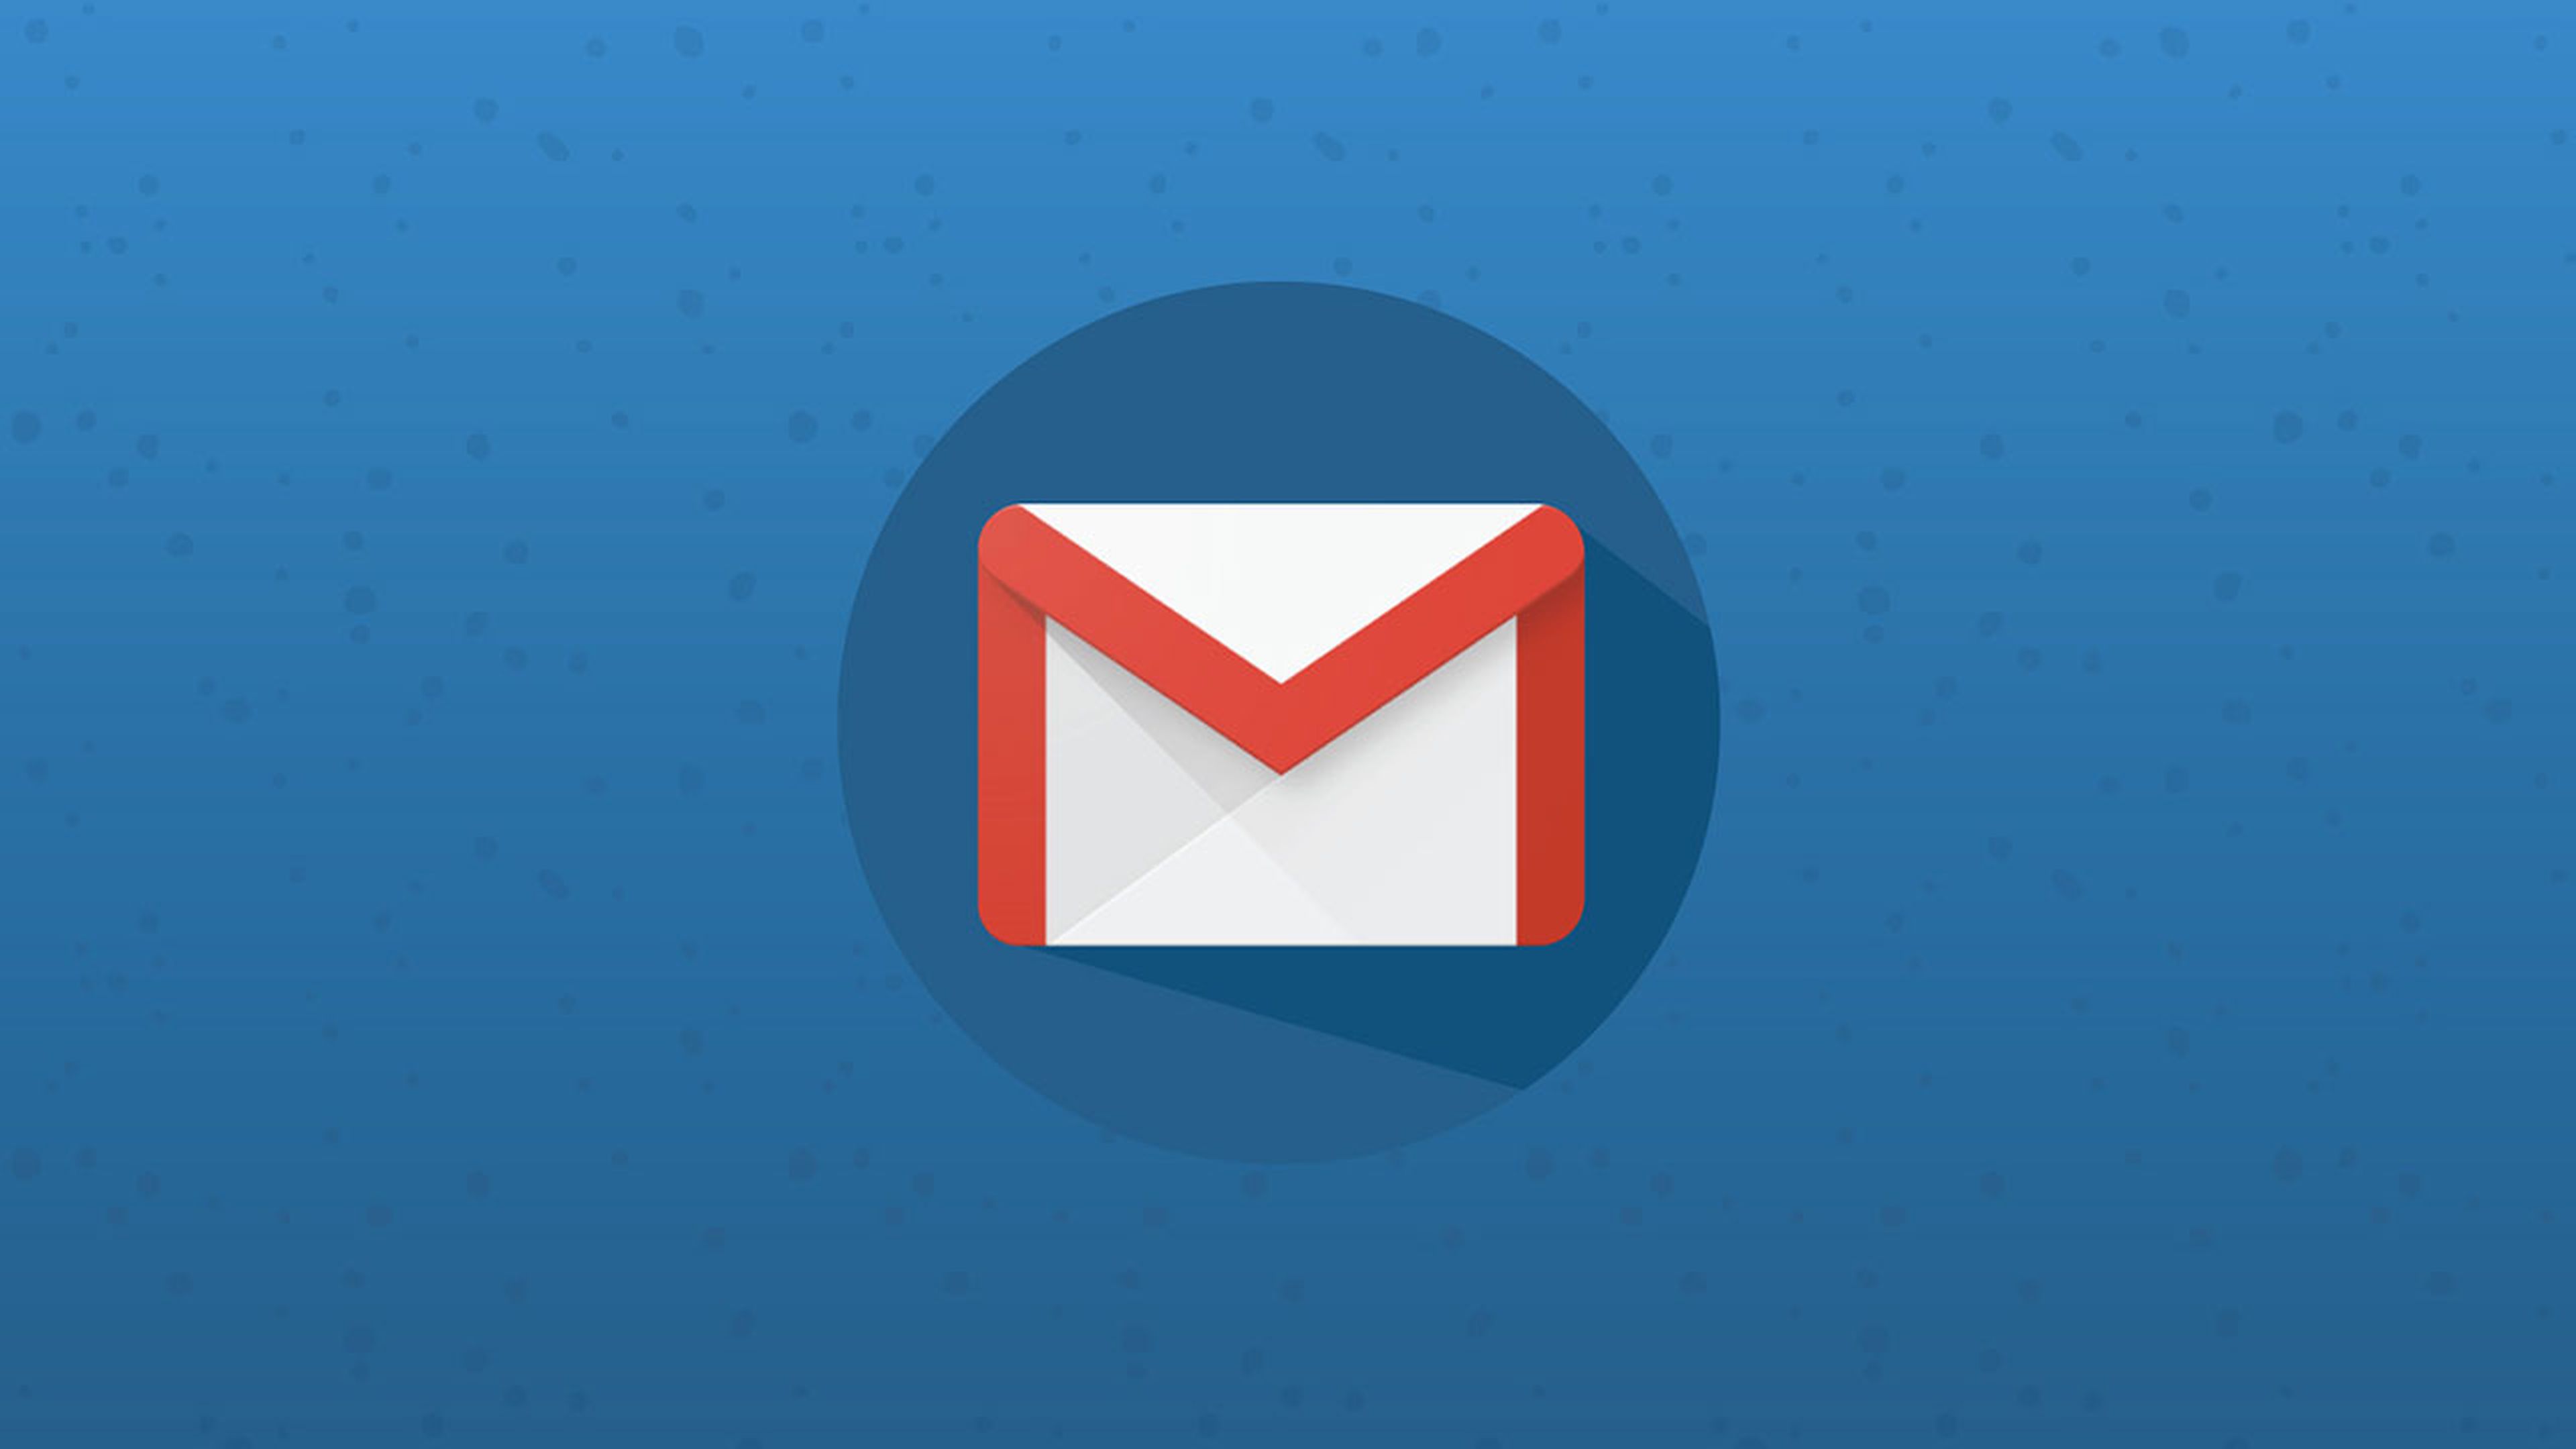 F gmail com. Gmail почта. Gmail фото. Обои для почты gmail.